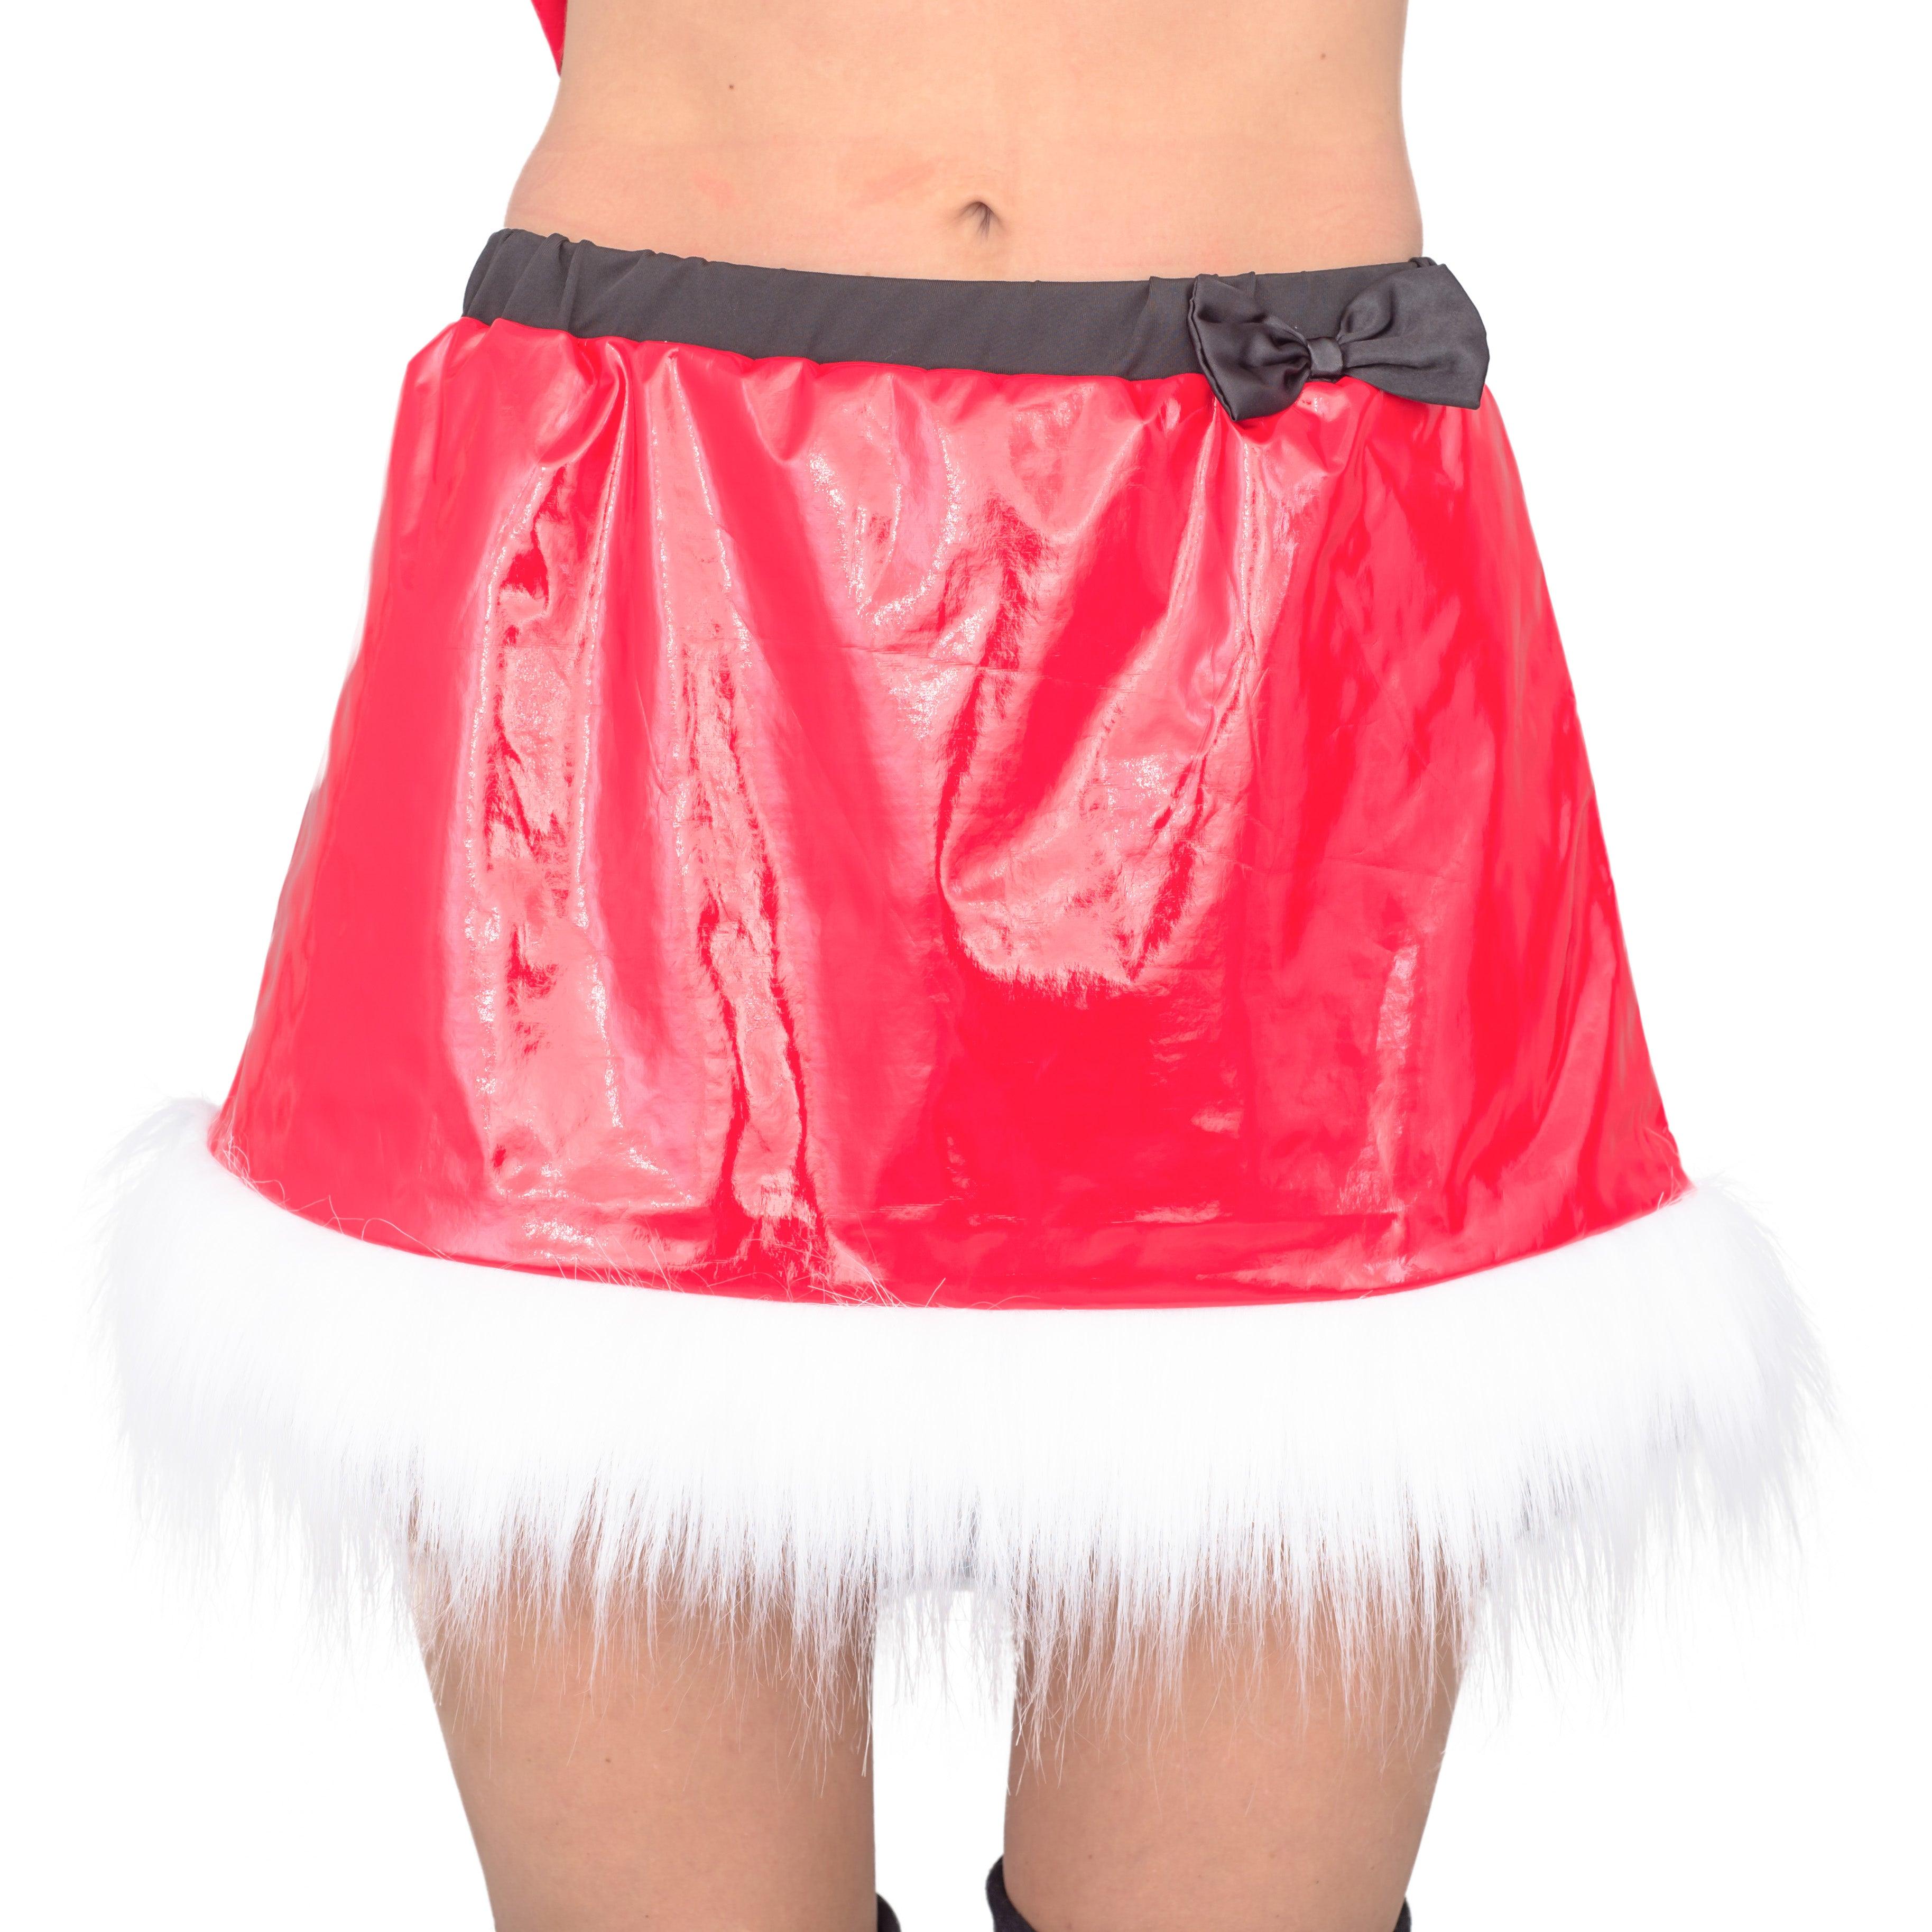 Mean Girls Jingle Bell Santa Claus Halloween Costume Set - TVStoreOnline